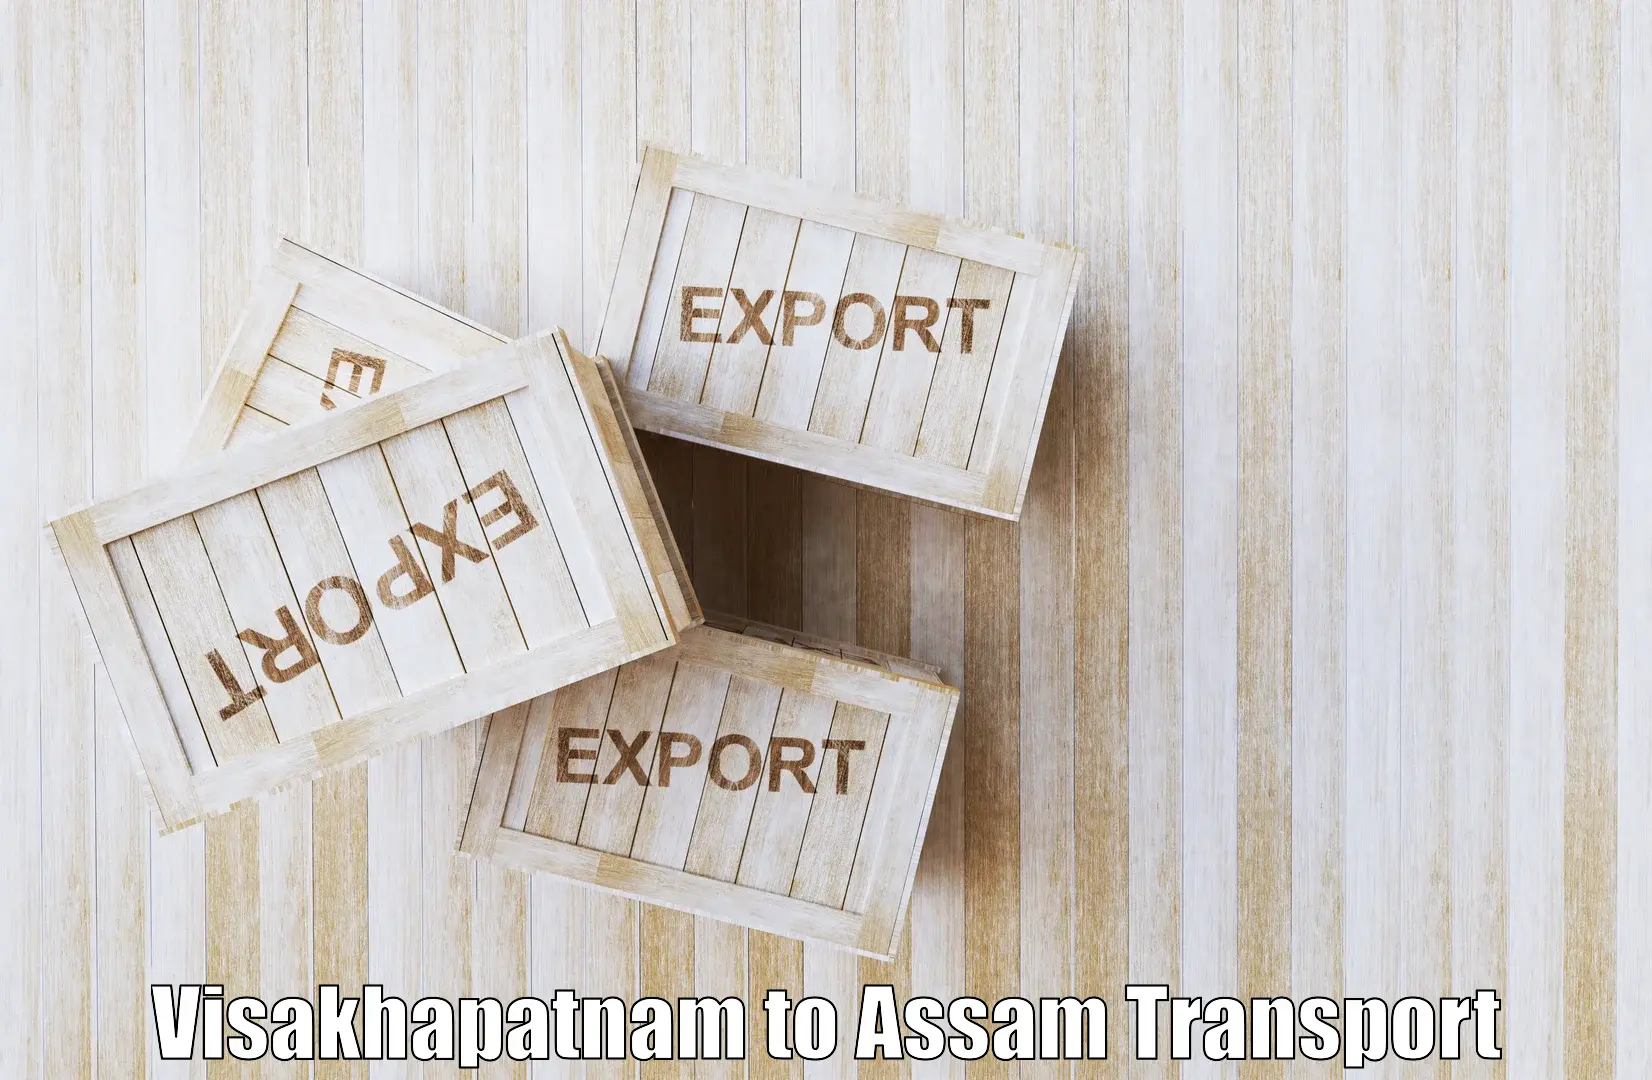 Nearest transport service Visakhapatnam to Amoni